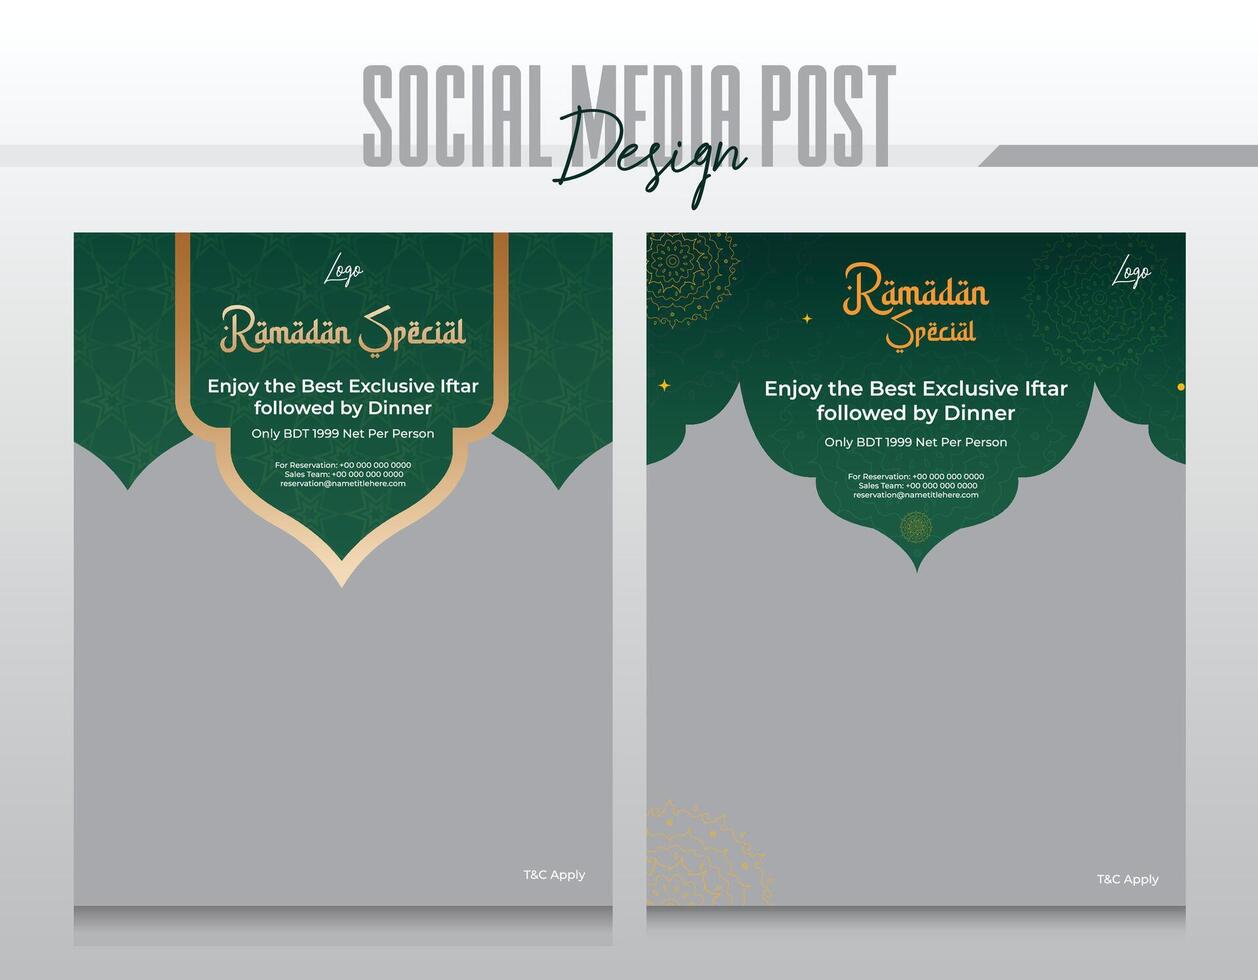 Ramadan Angebot Sozial Medien Post vektor